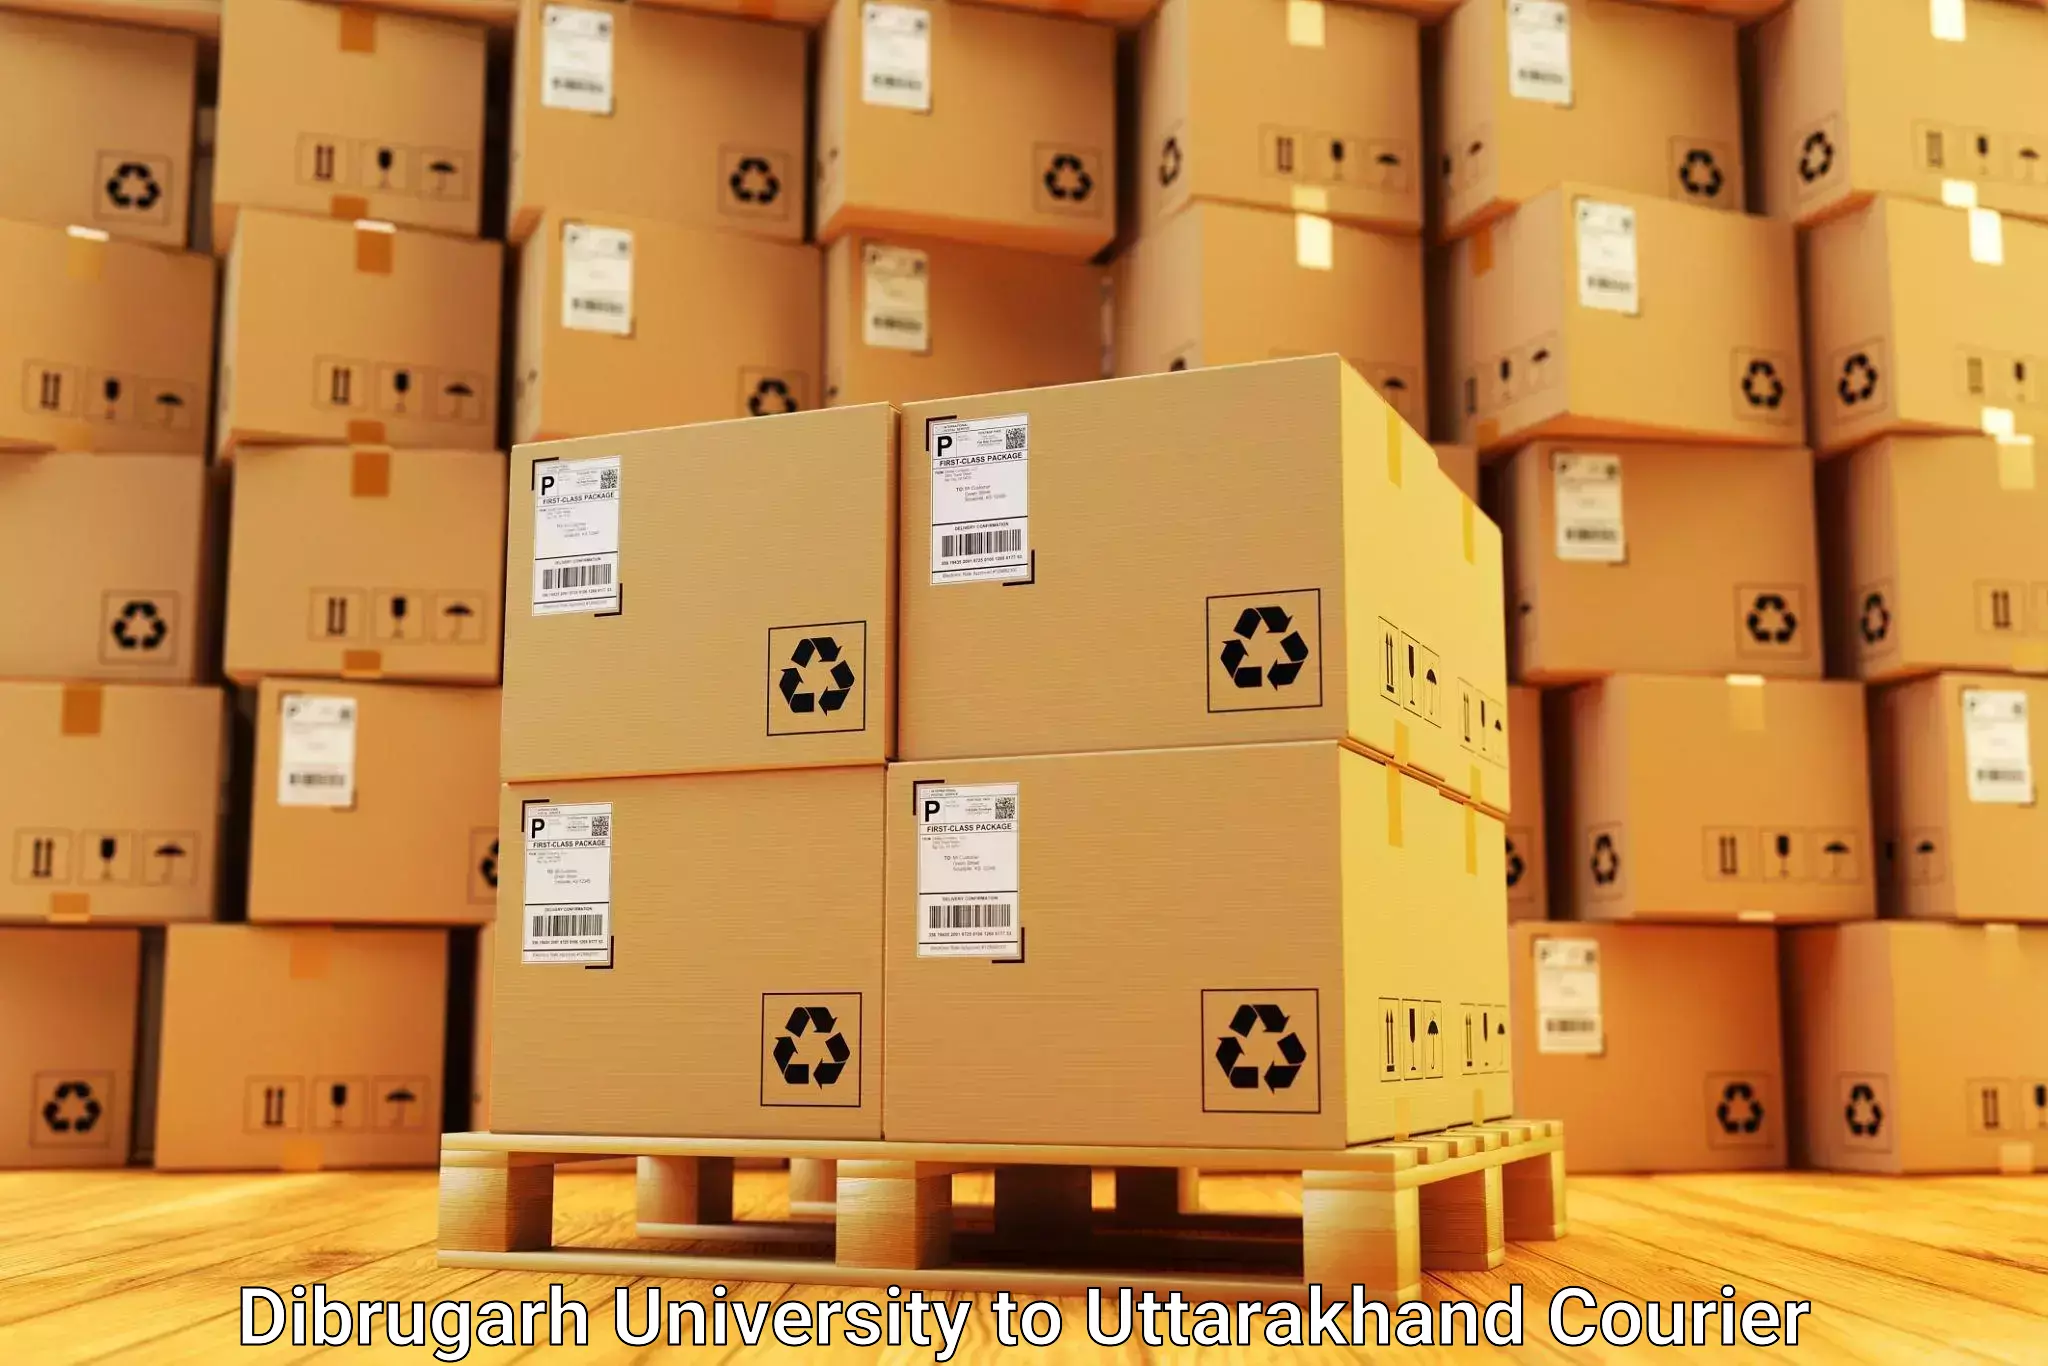 Furniture relocation experts Dibrugarh University to Uttarakhand